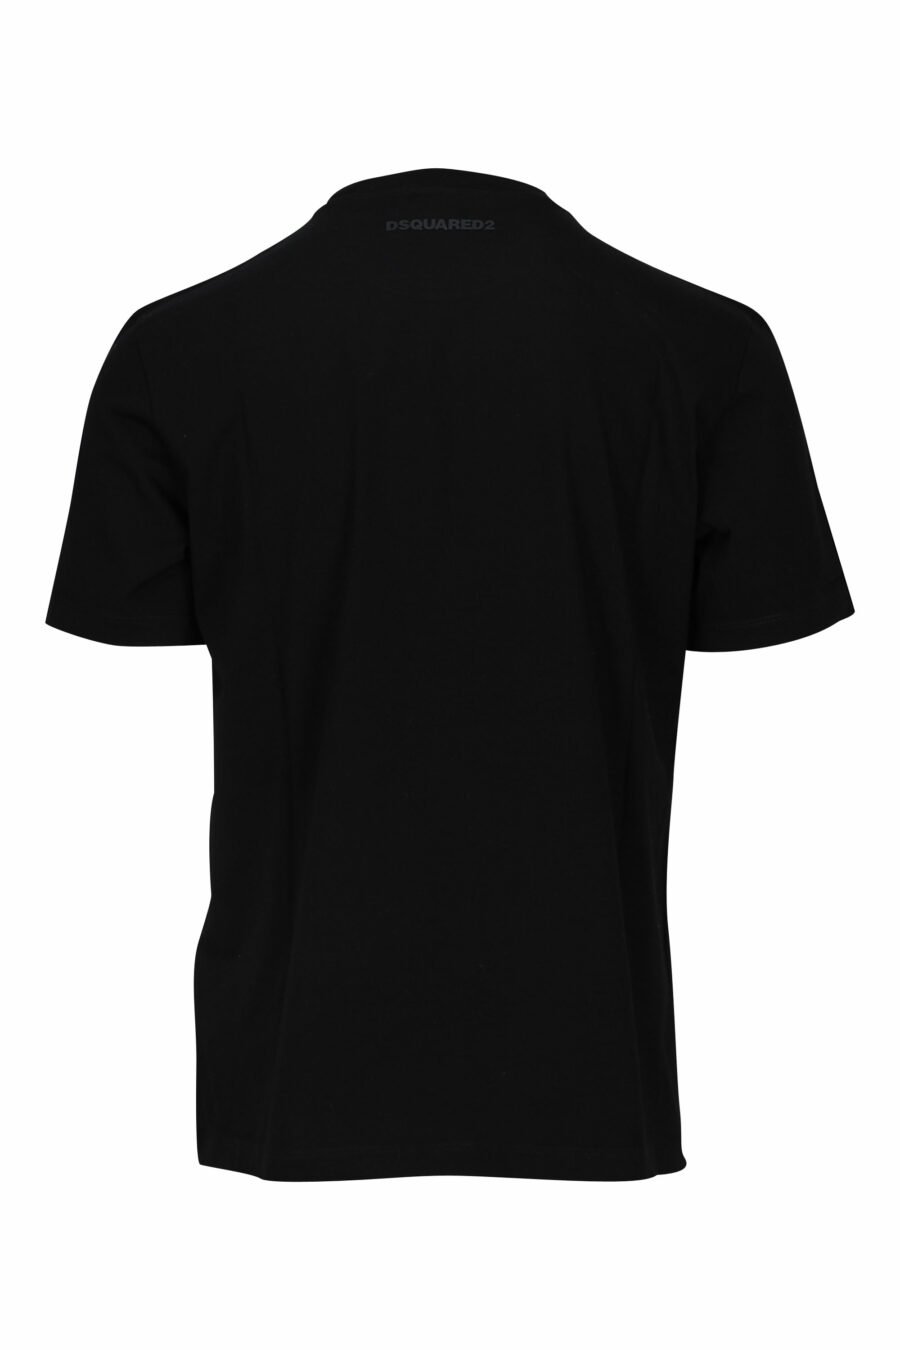 Black T-shirt with white checked "icon" logo - 8052134981399 1